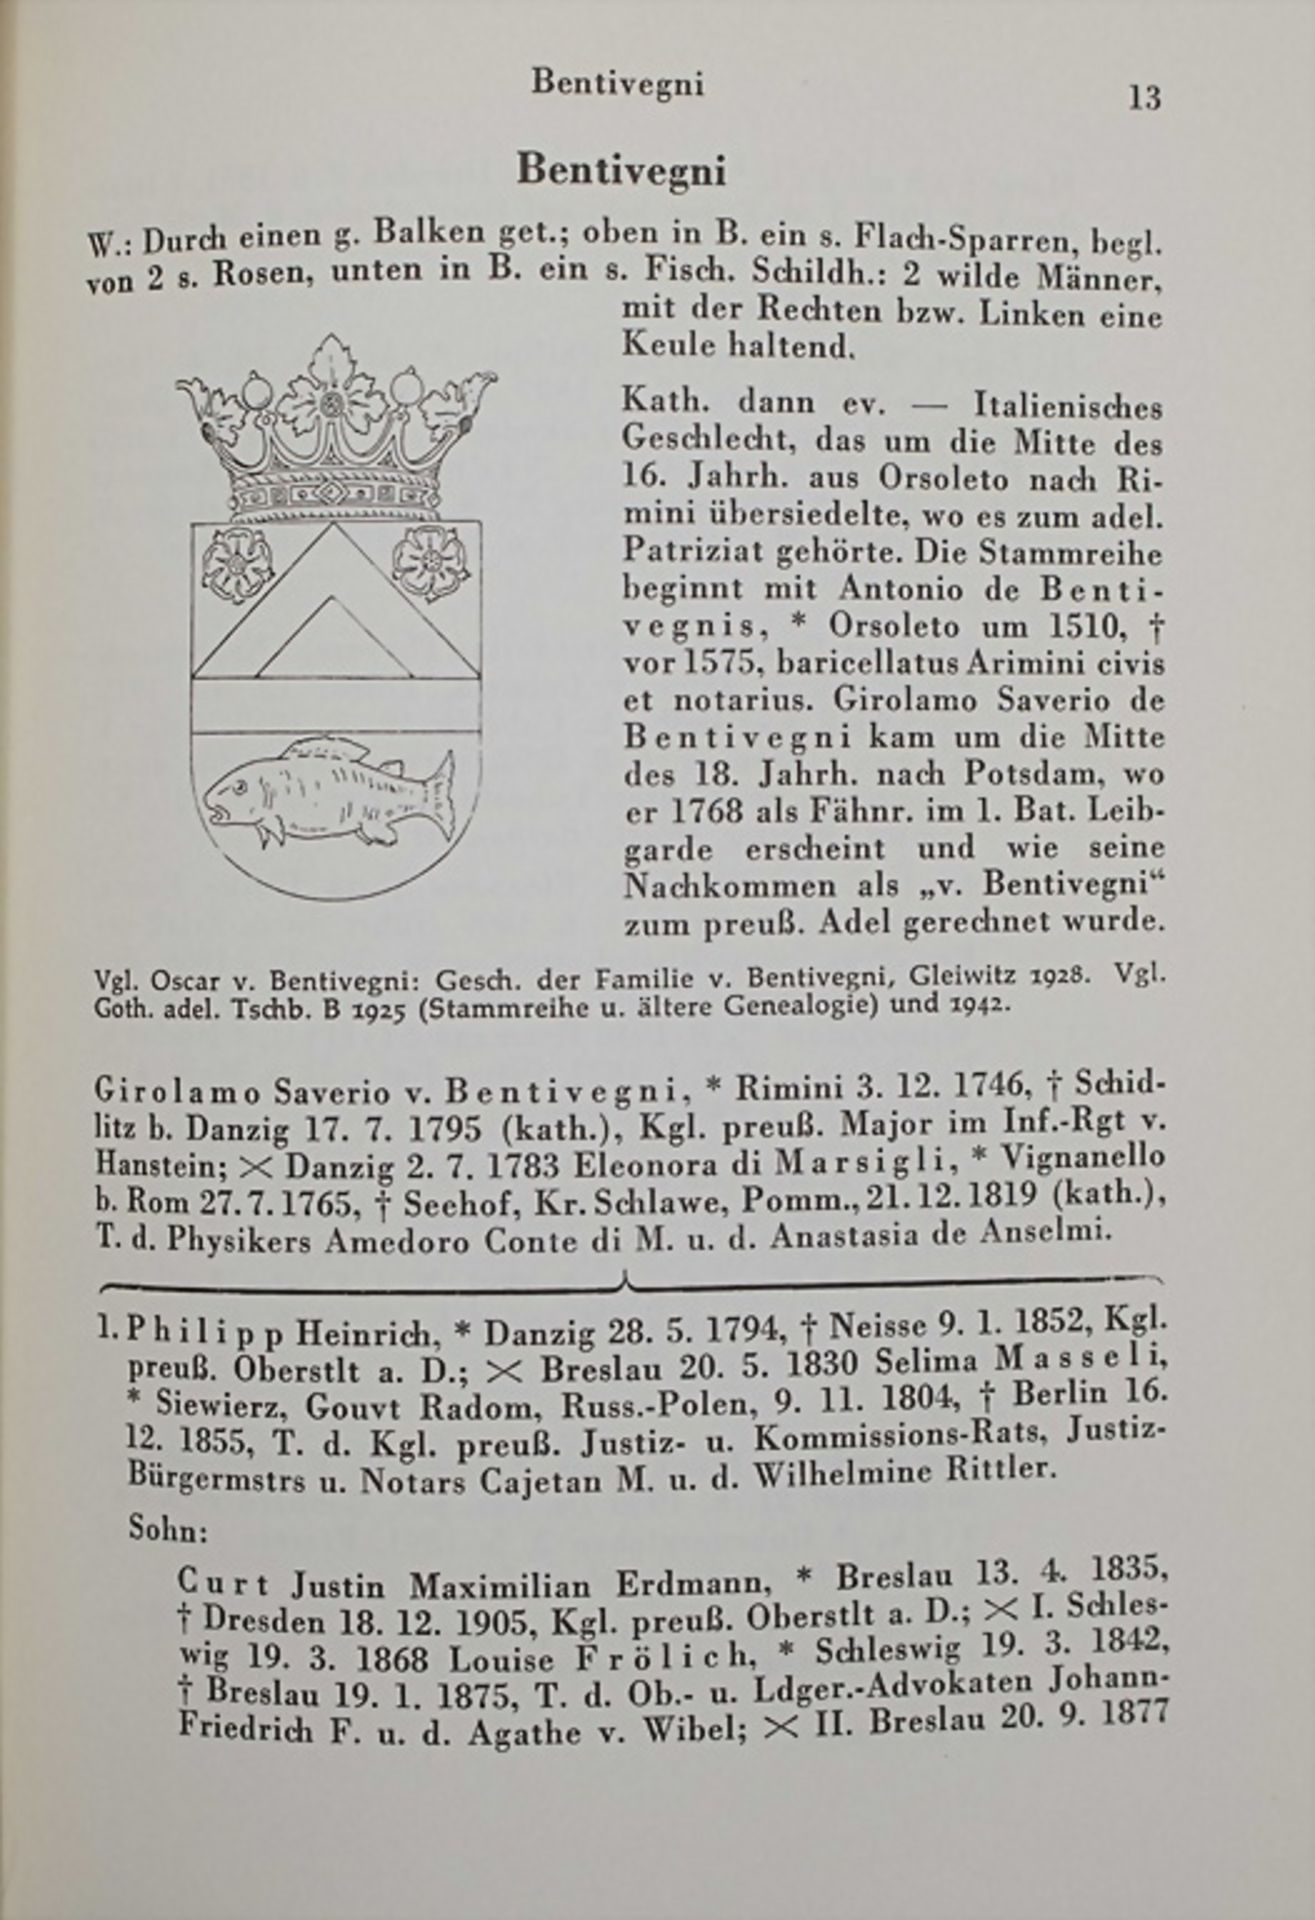 Genealogisches Handbuch des Adels Band III, Glücksburg, 1958 - Image 4 of 6